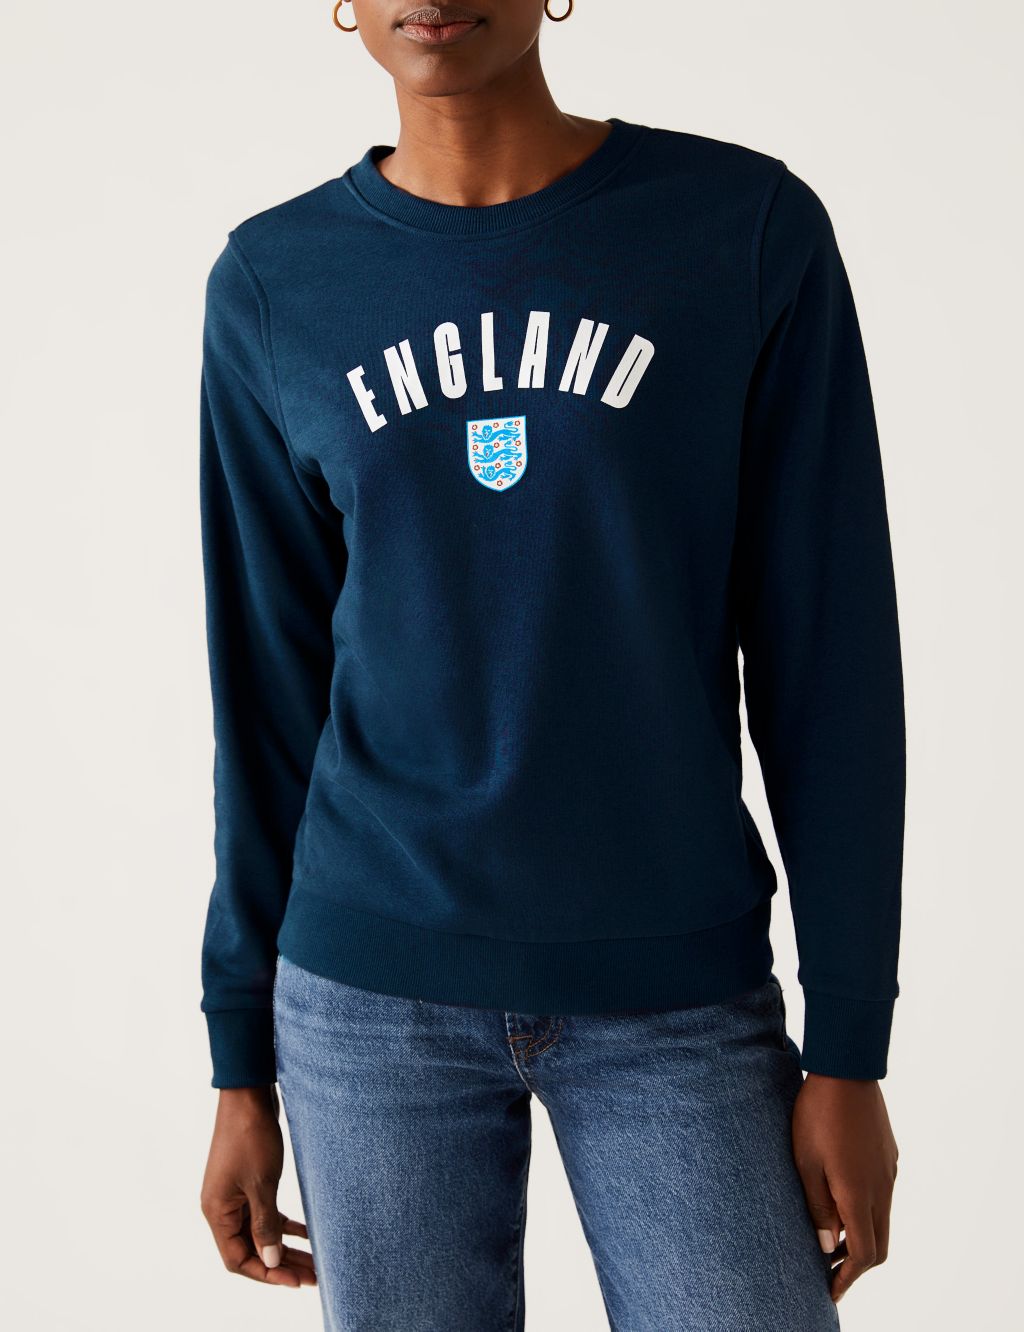 Women's Cotton Rich England Sweatshirt image 1